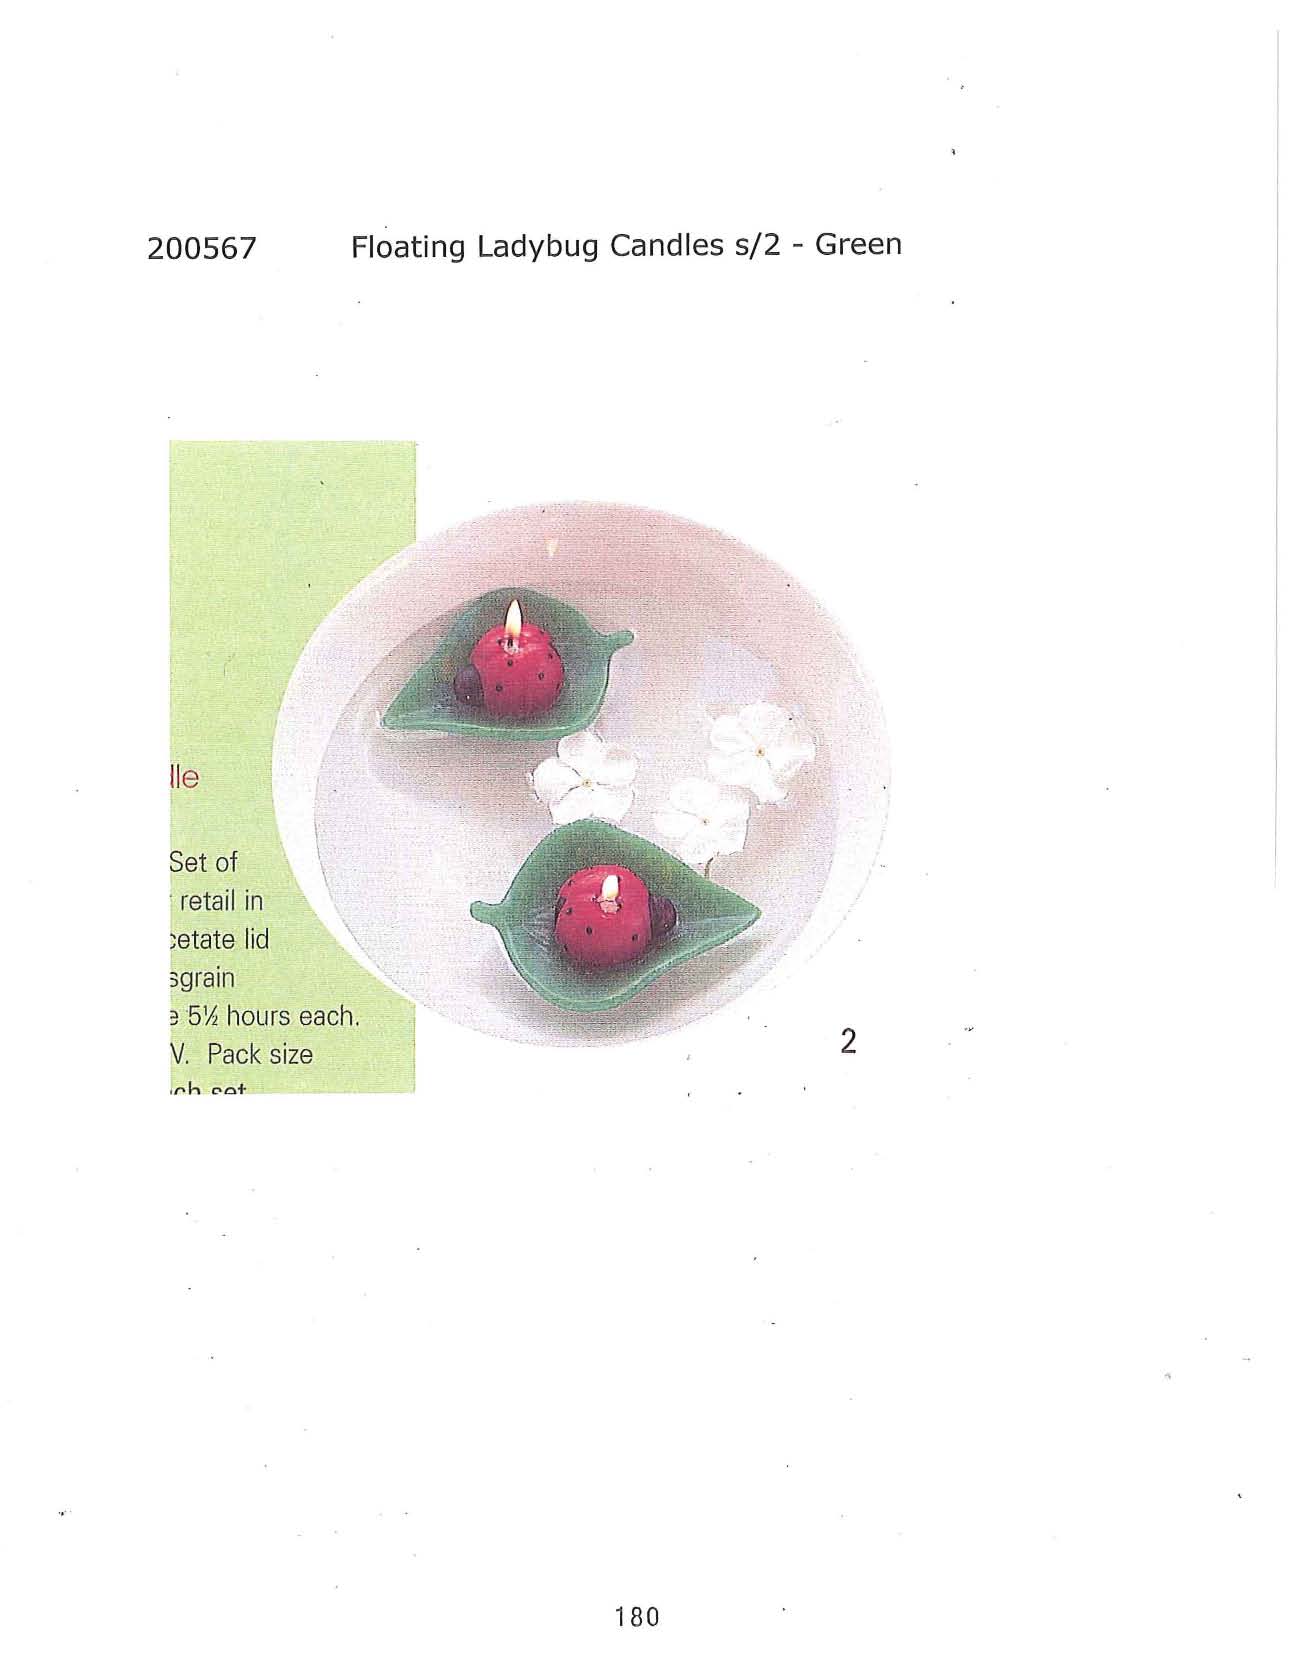 Floating Ladybug Candle s/2 - Green